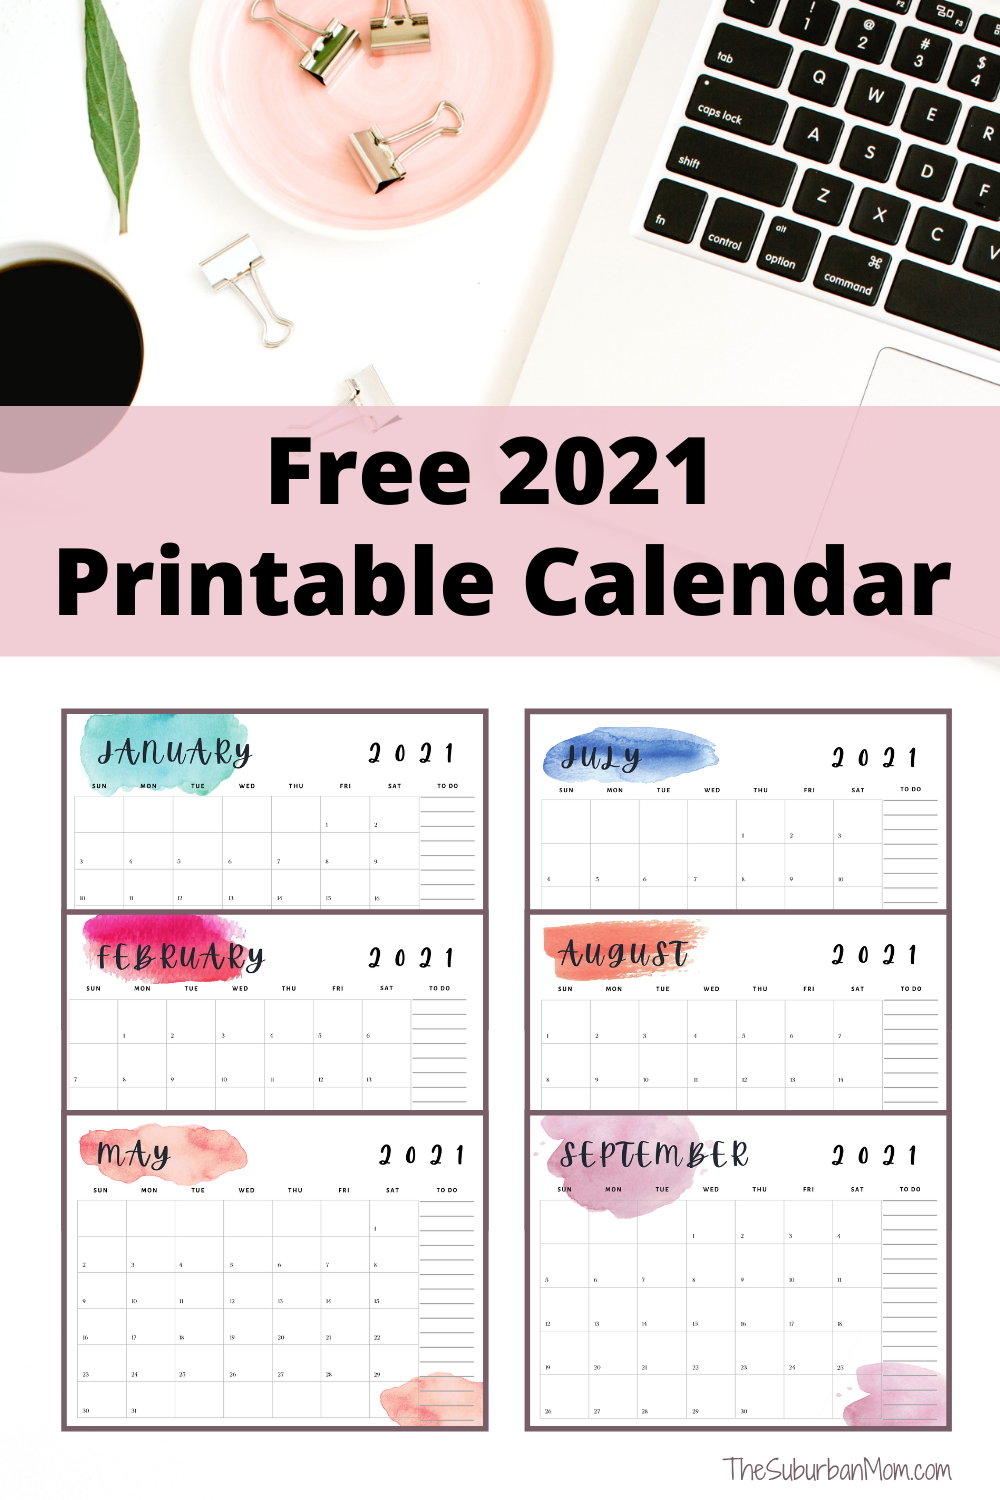 2021 Free Printable Calendar - The Suburban Mom